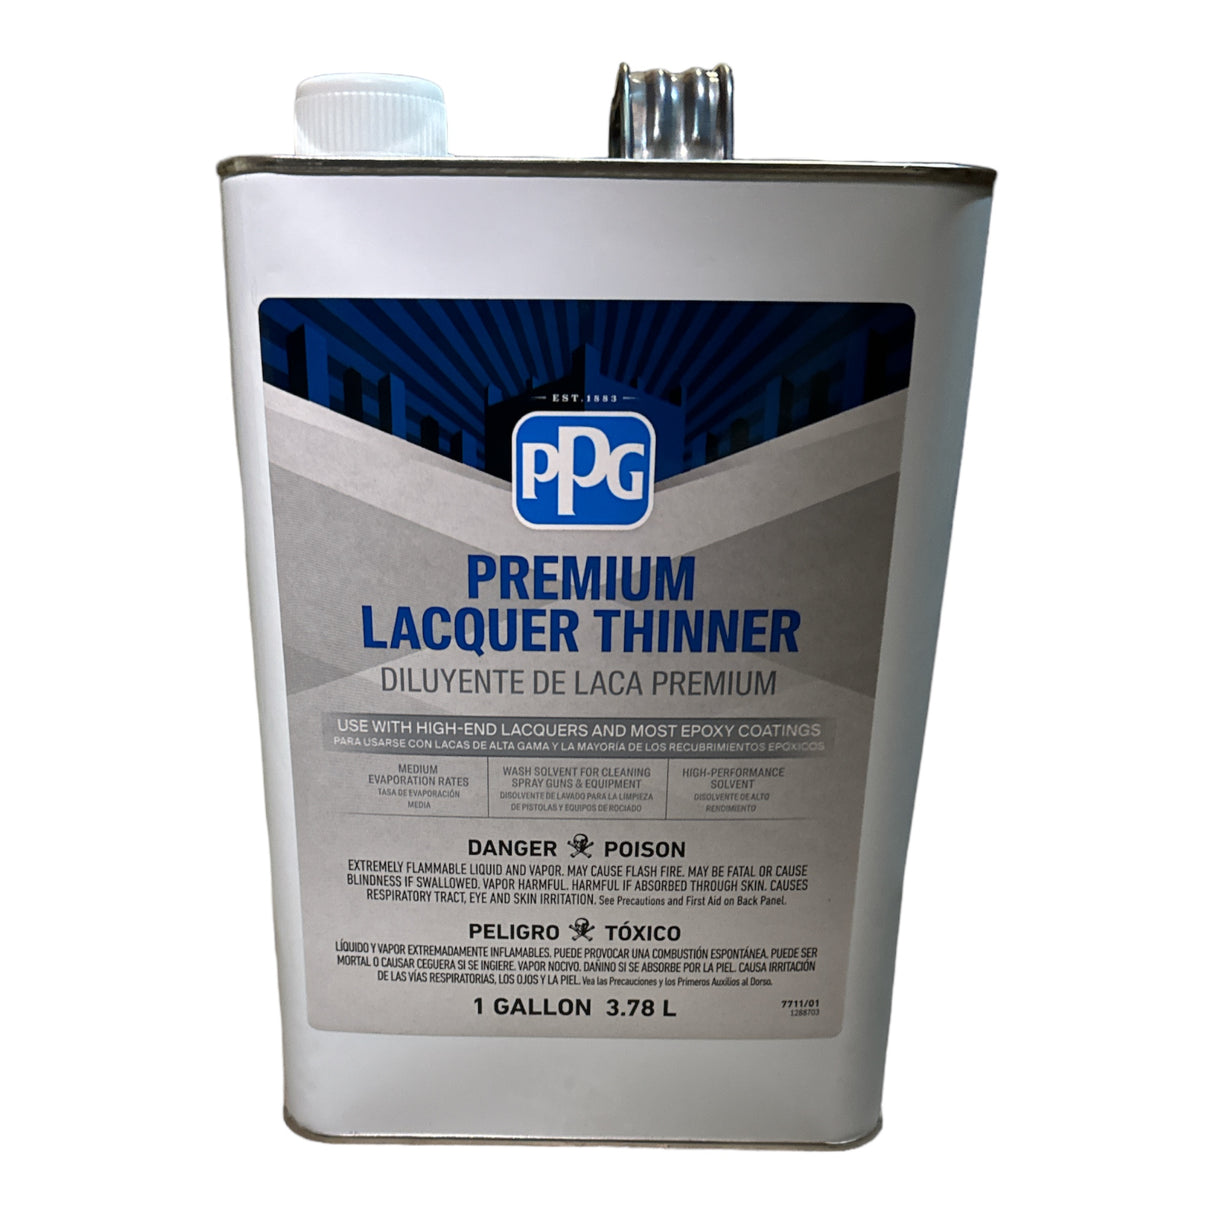 PPG Premium Lacquer Thinner